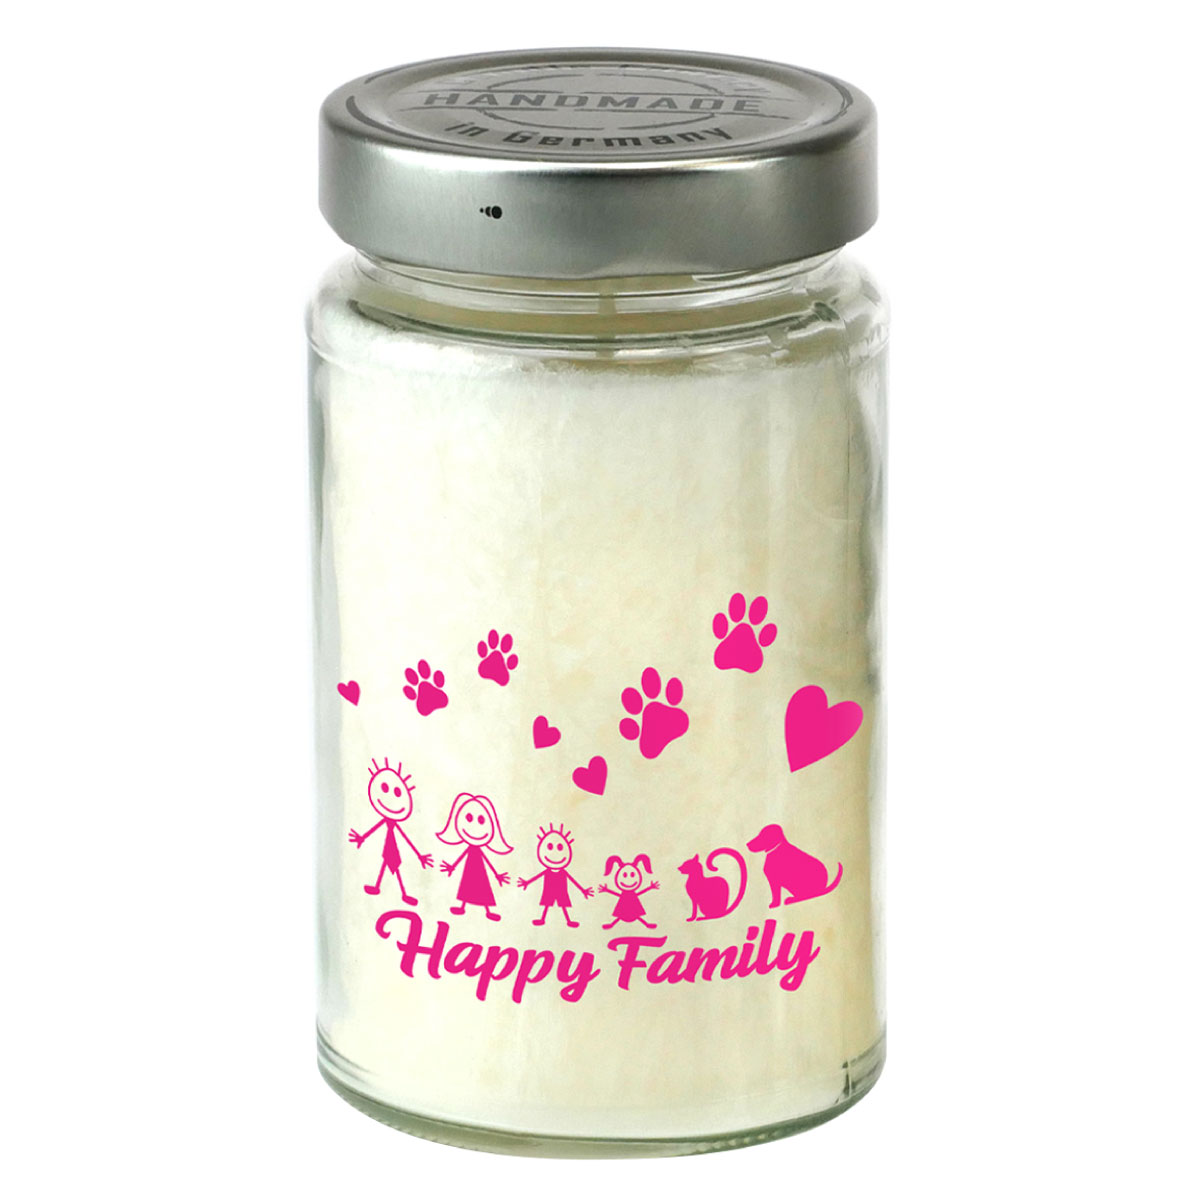 Happy Family - Bedruckte Duftkerze von Candle Factory [groß]